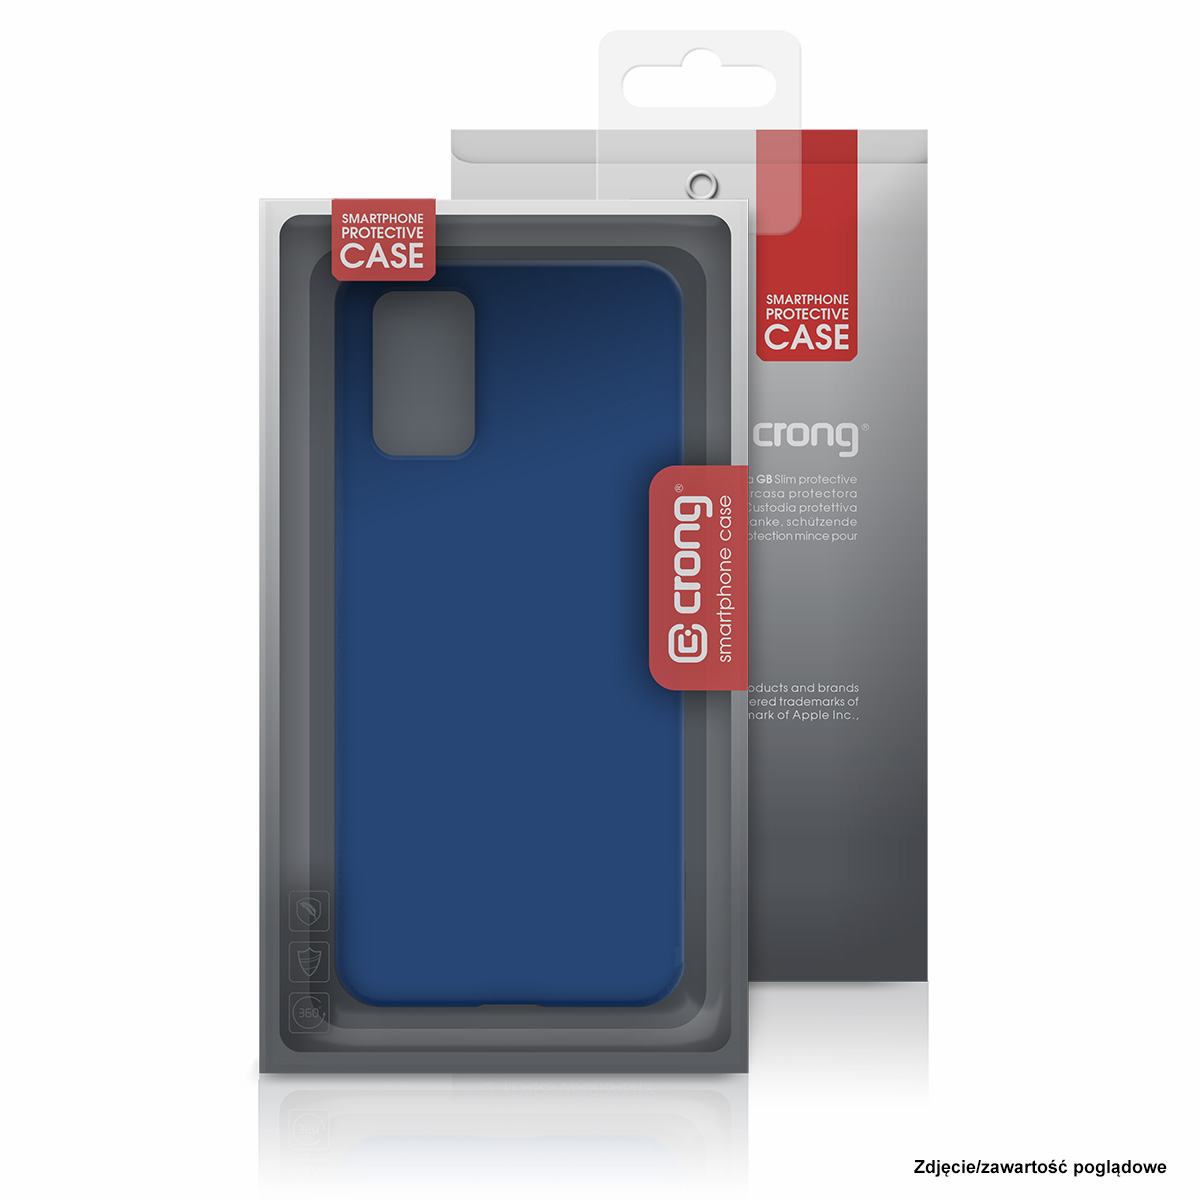 Crong Crystal Slim Cover - Etui Samsung Galaxy S20+ (przezroczysty)